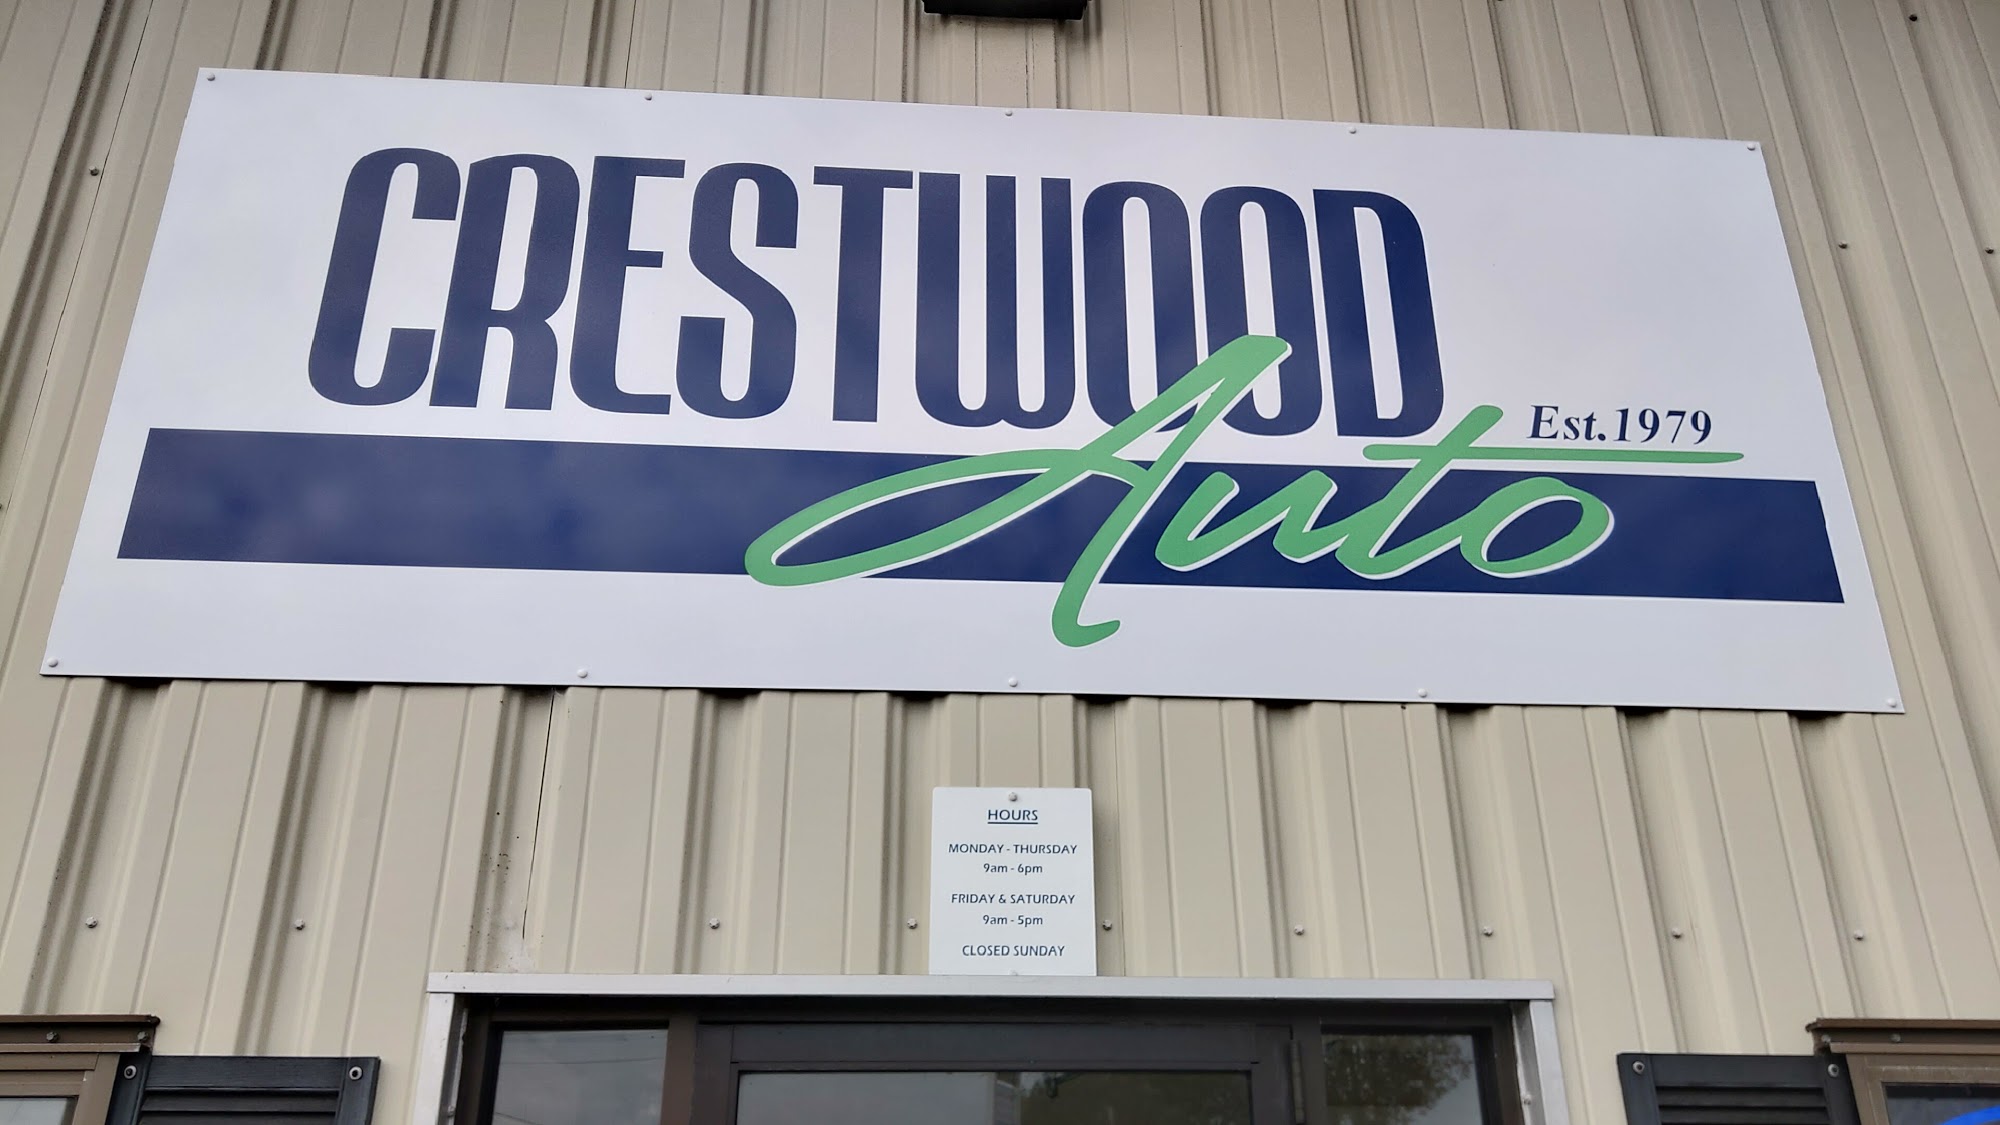 Crestwood Auto Sales